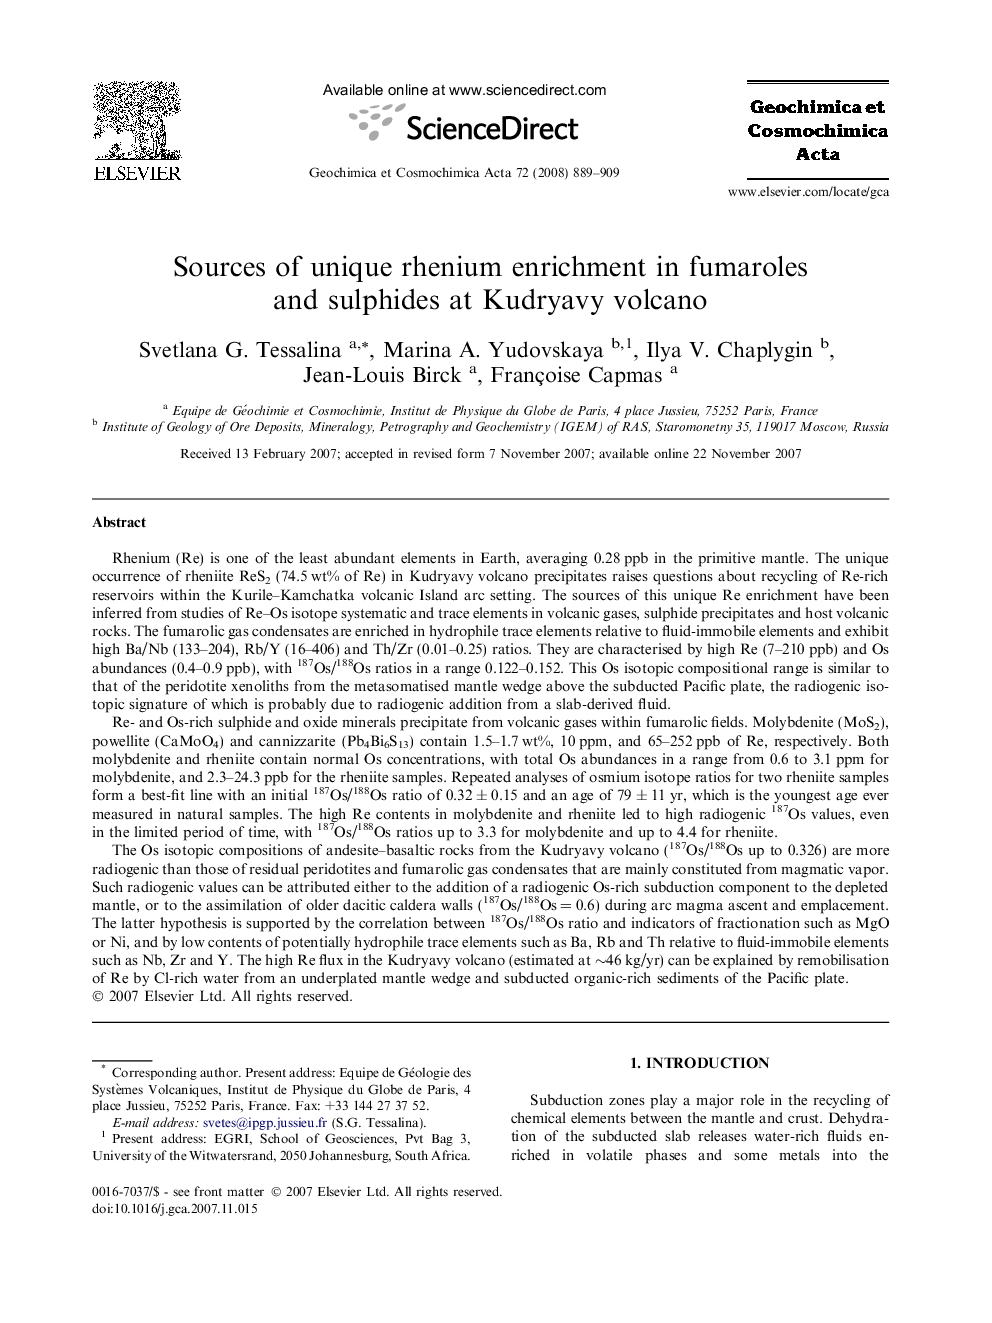 Sources of unique rhenium enrichment in fumaroles and sulphides at Kudryavy volcano